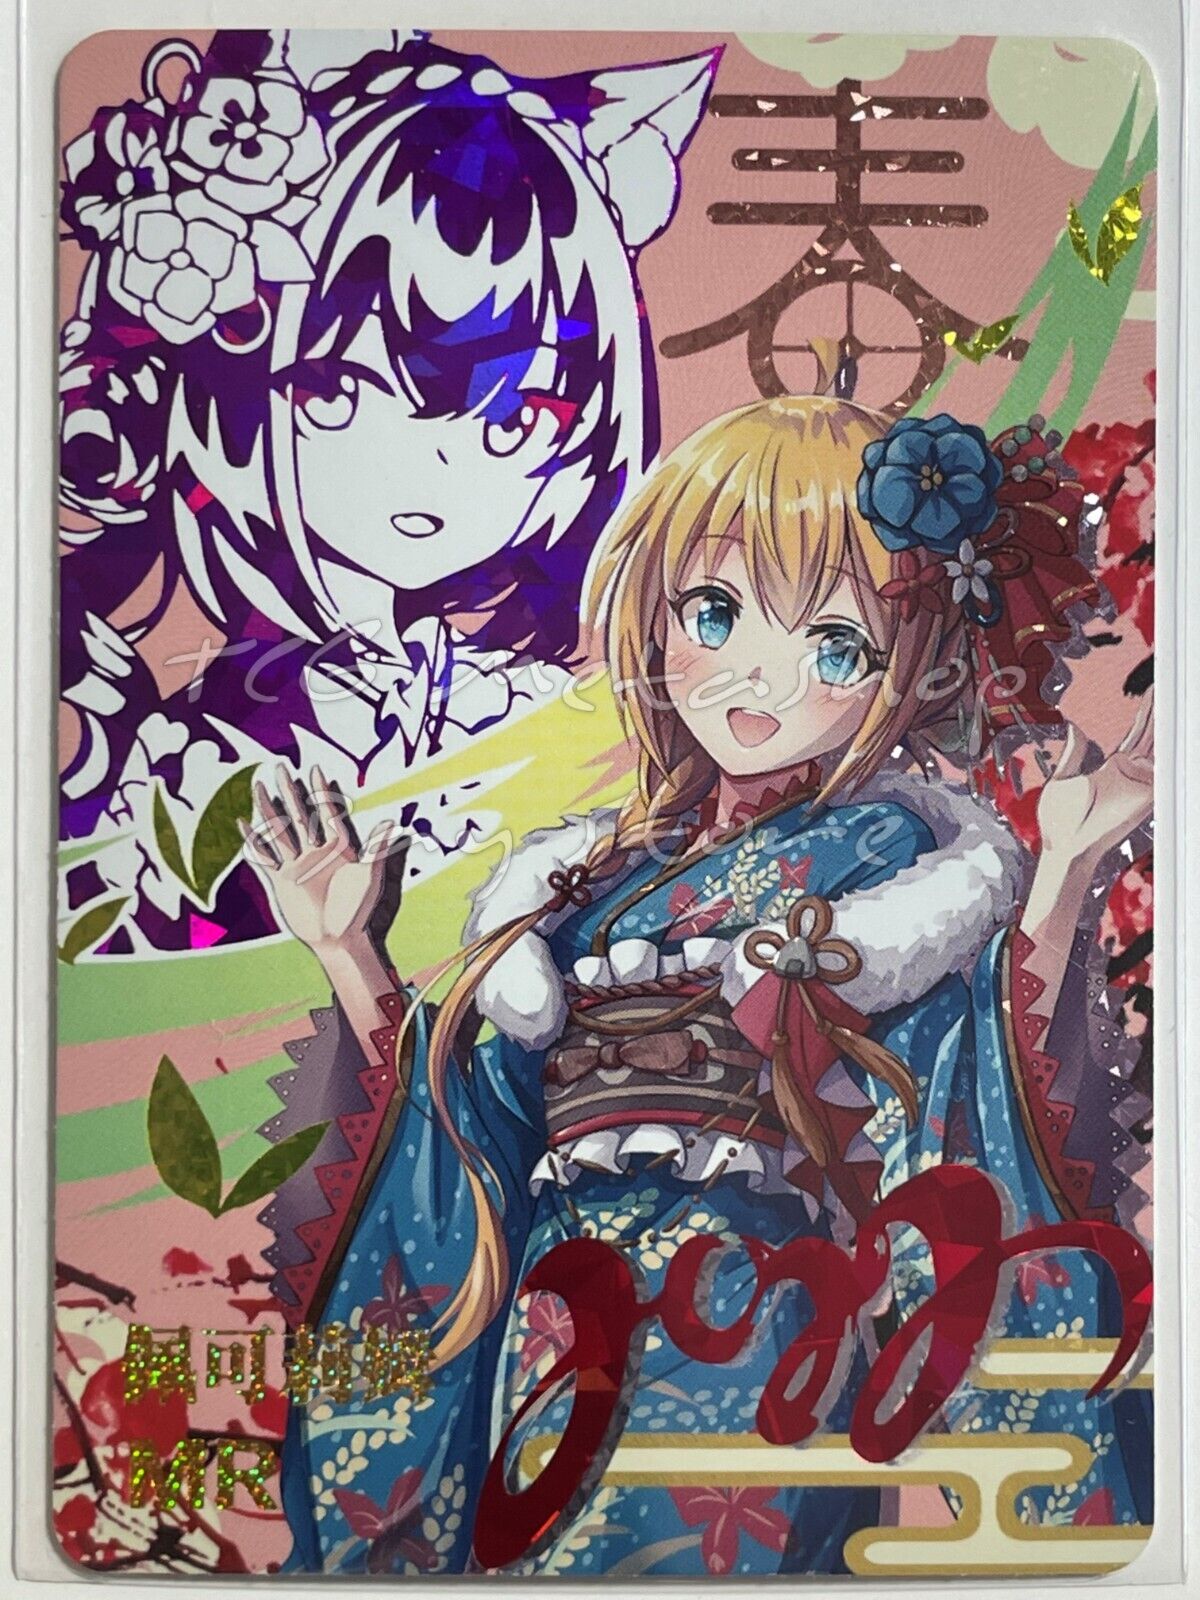 🔥 10m02 [Pick Your MR SP BGL FR Card 1 - 72] Goddess Story Waifu Anime Card 🔥